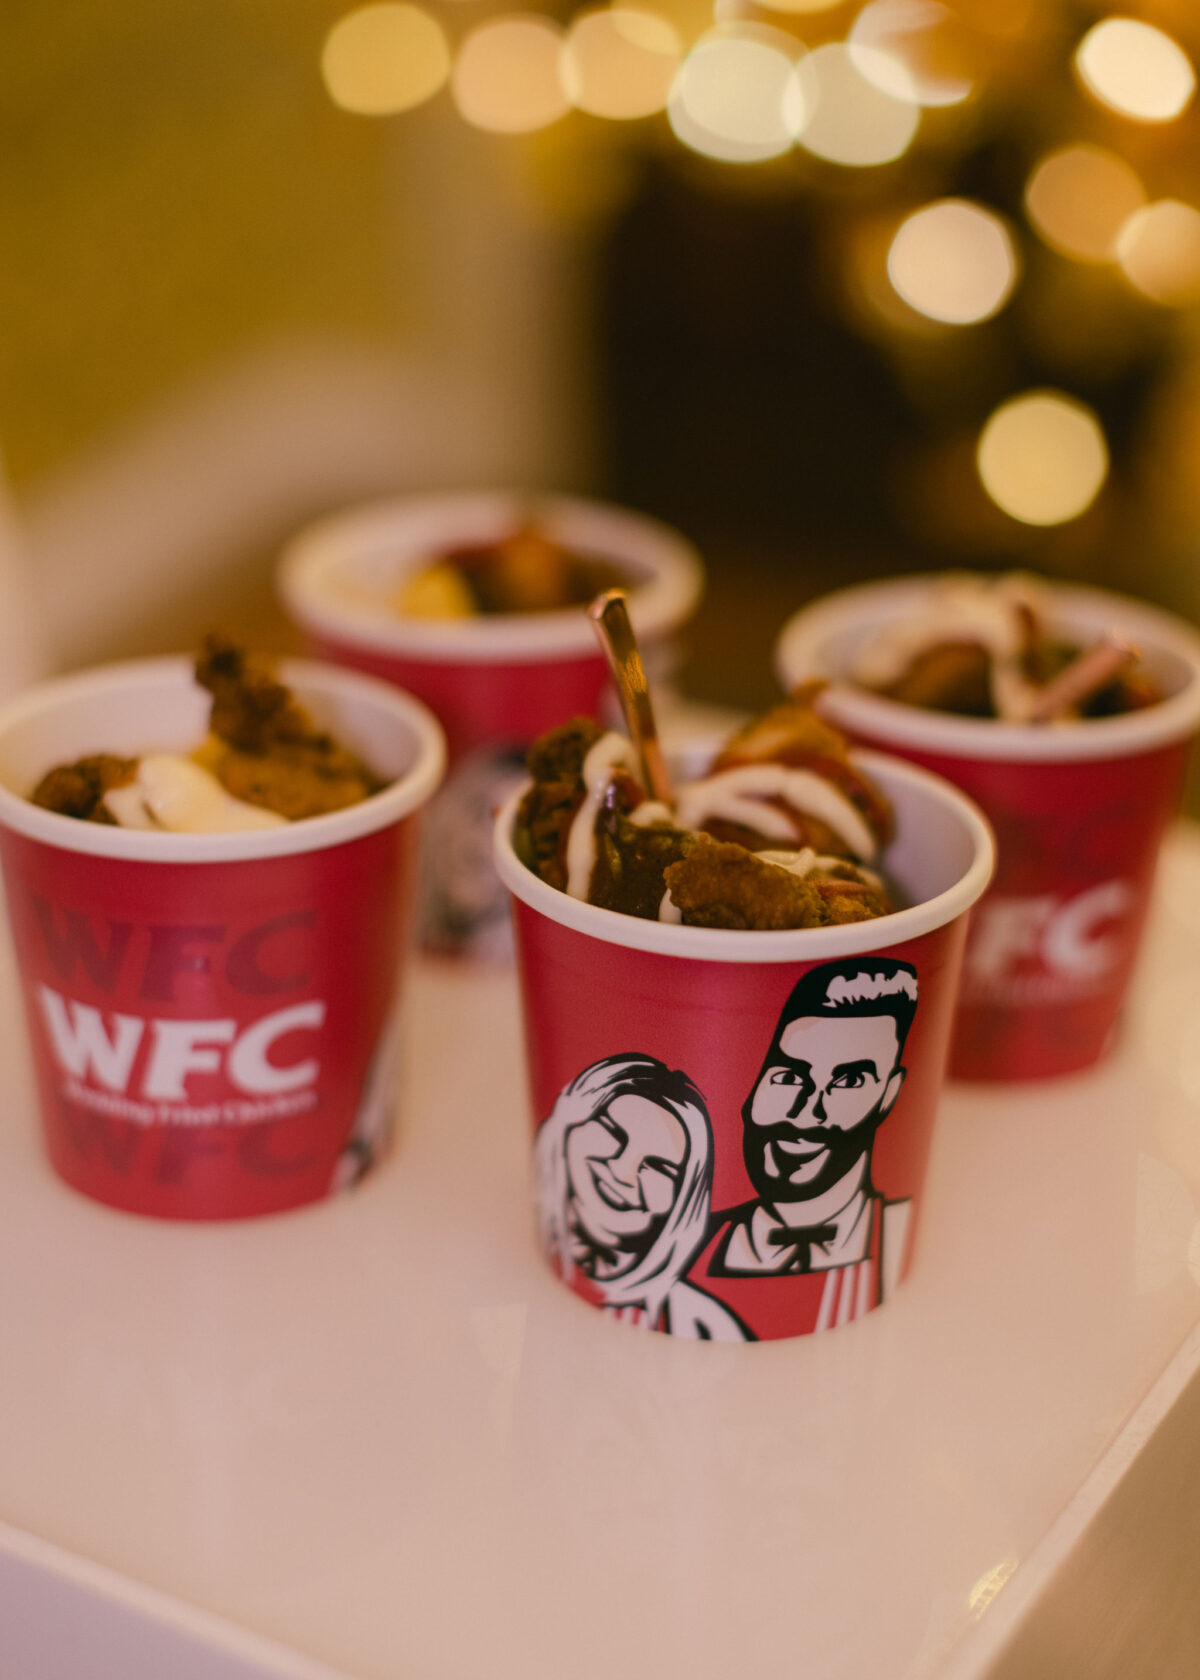 Buckets of KFC inspired evening wedding food - Buckinghamshire wedding